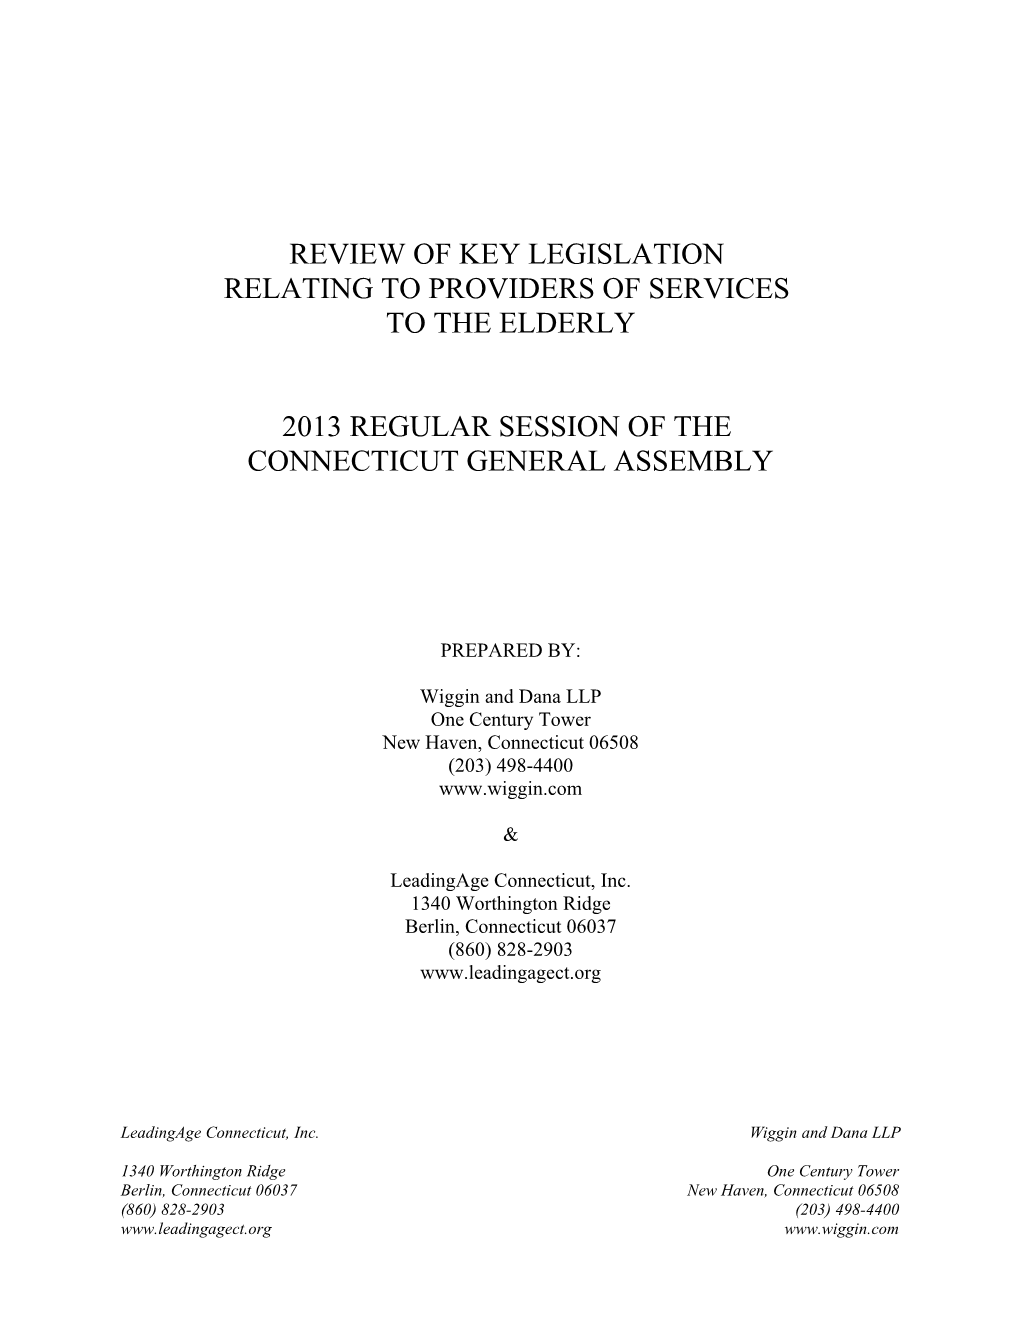 Review of Key Legislation